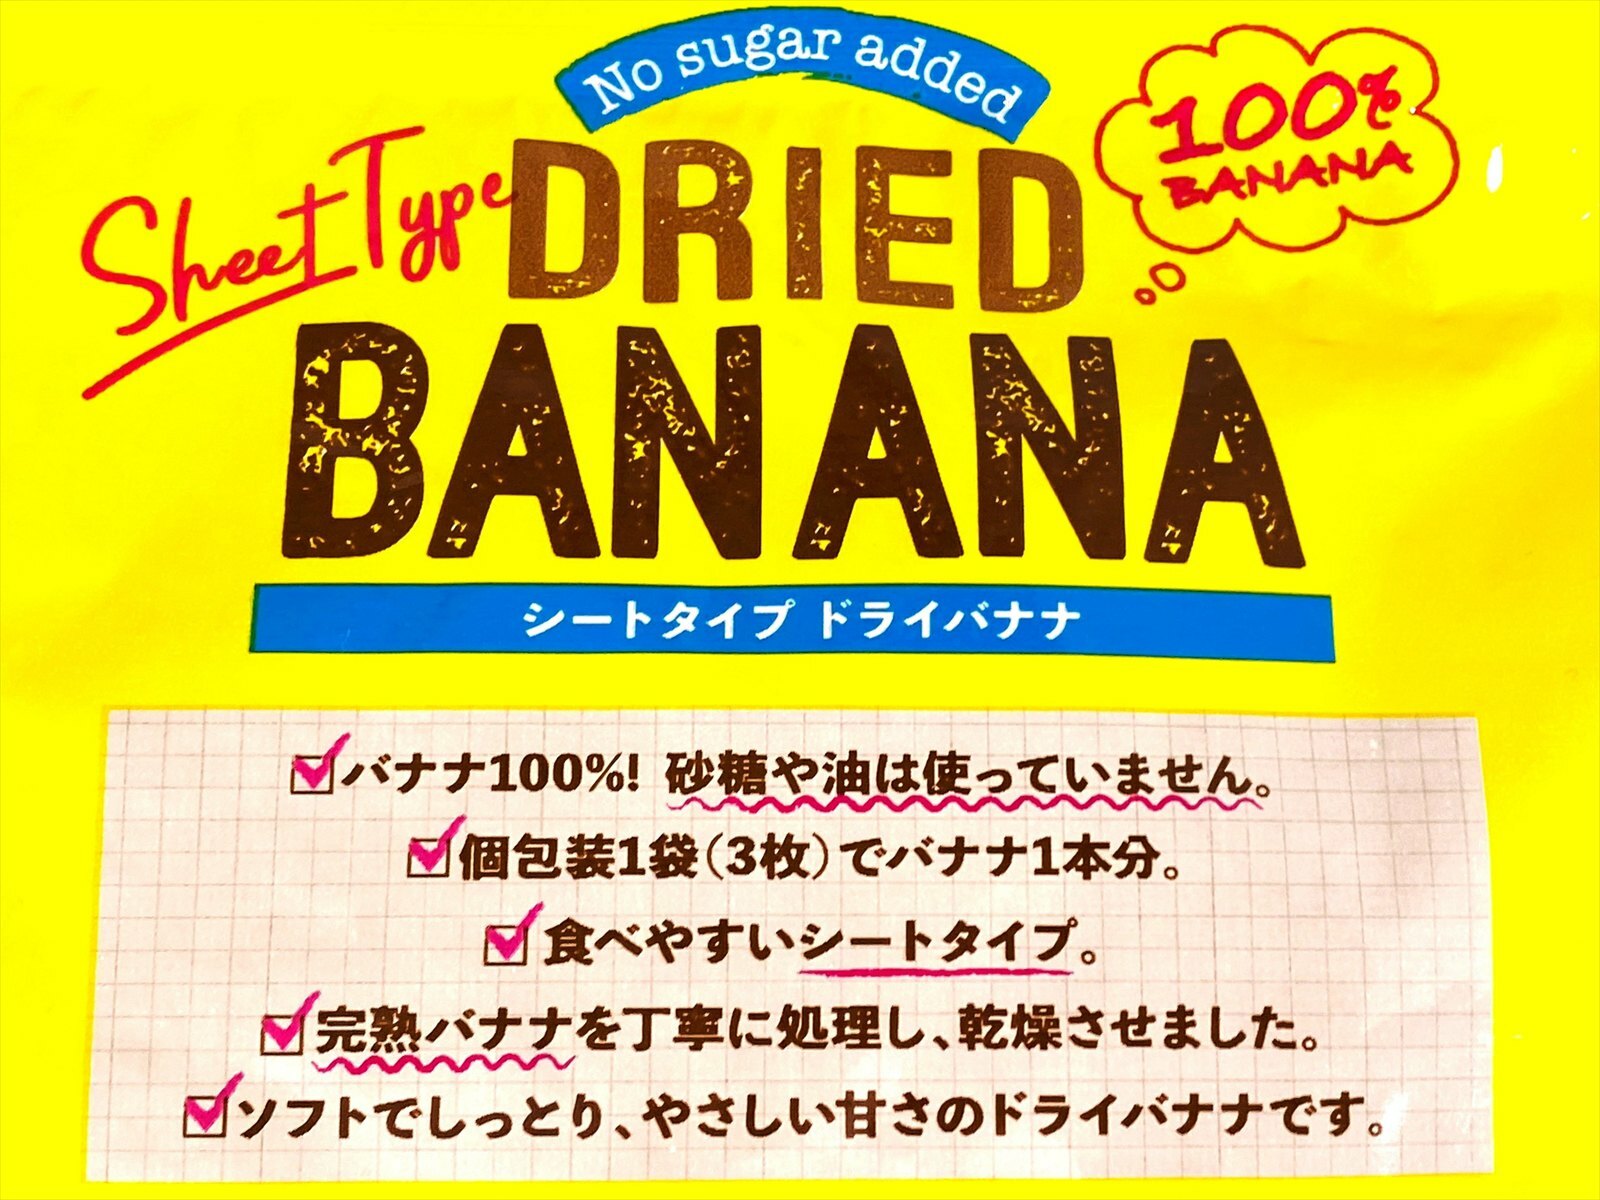 100% Banana. No Sugar Added. １００％バナナ 添加糖不使用。